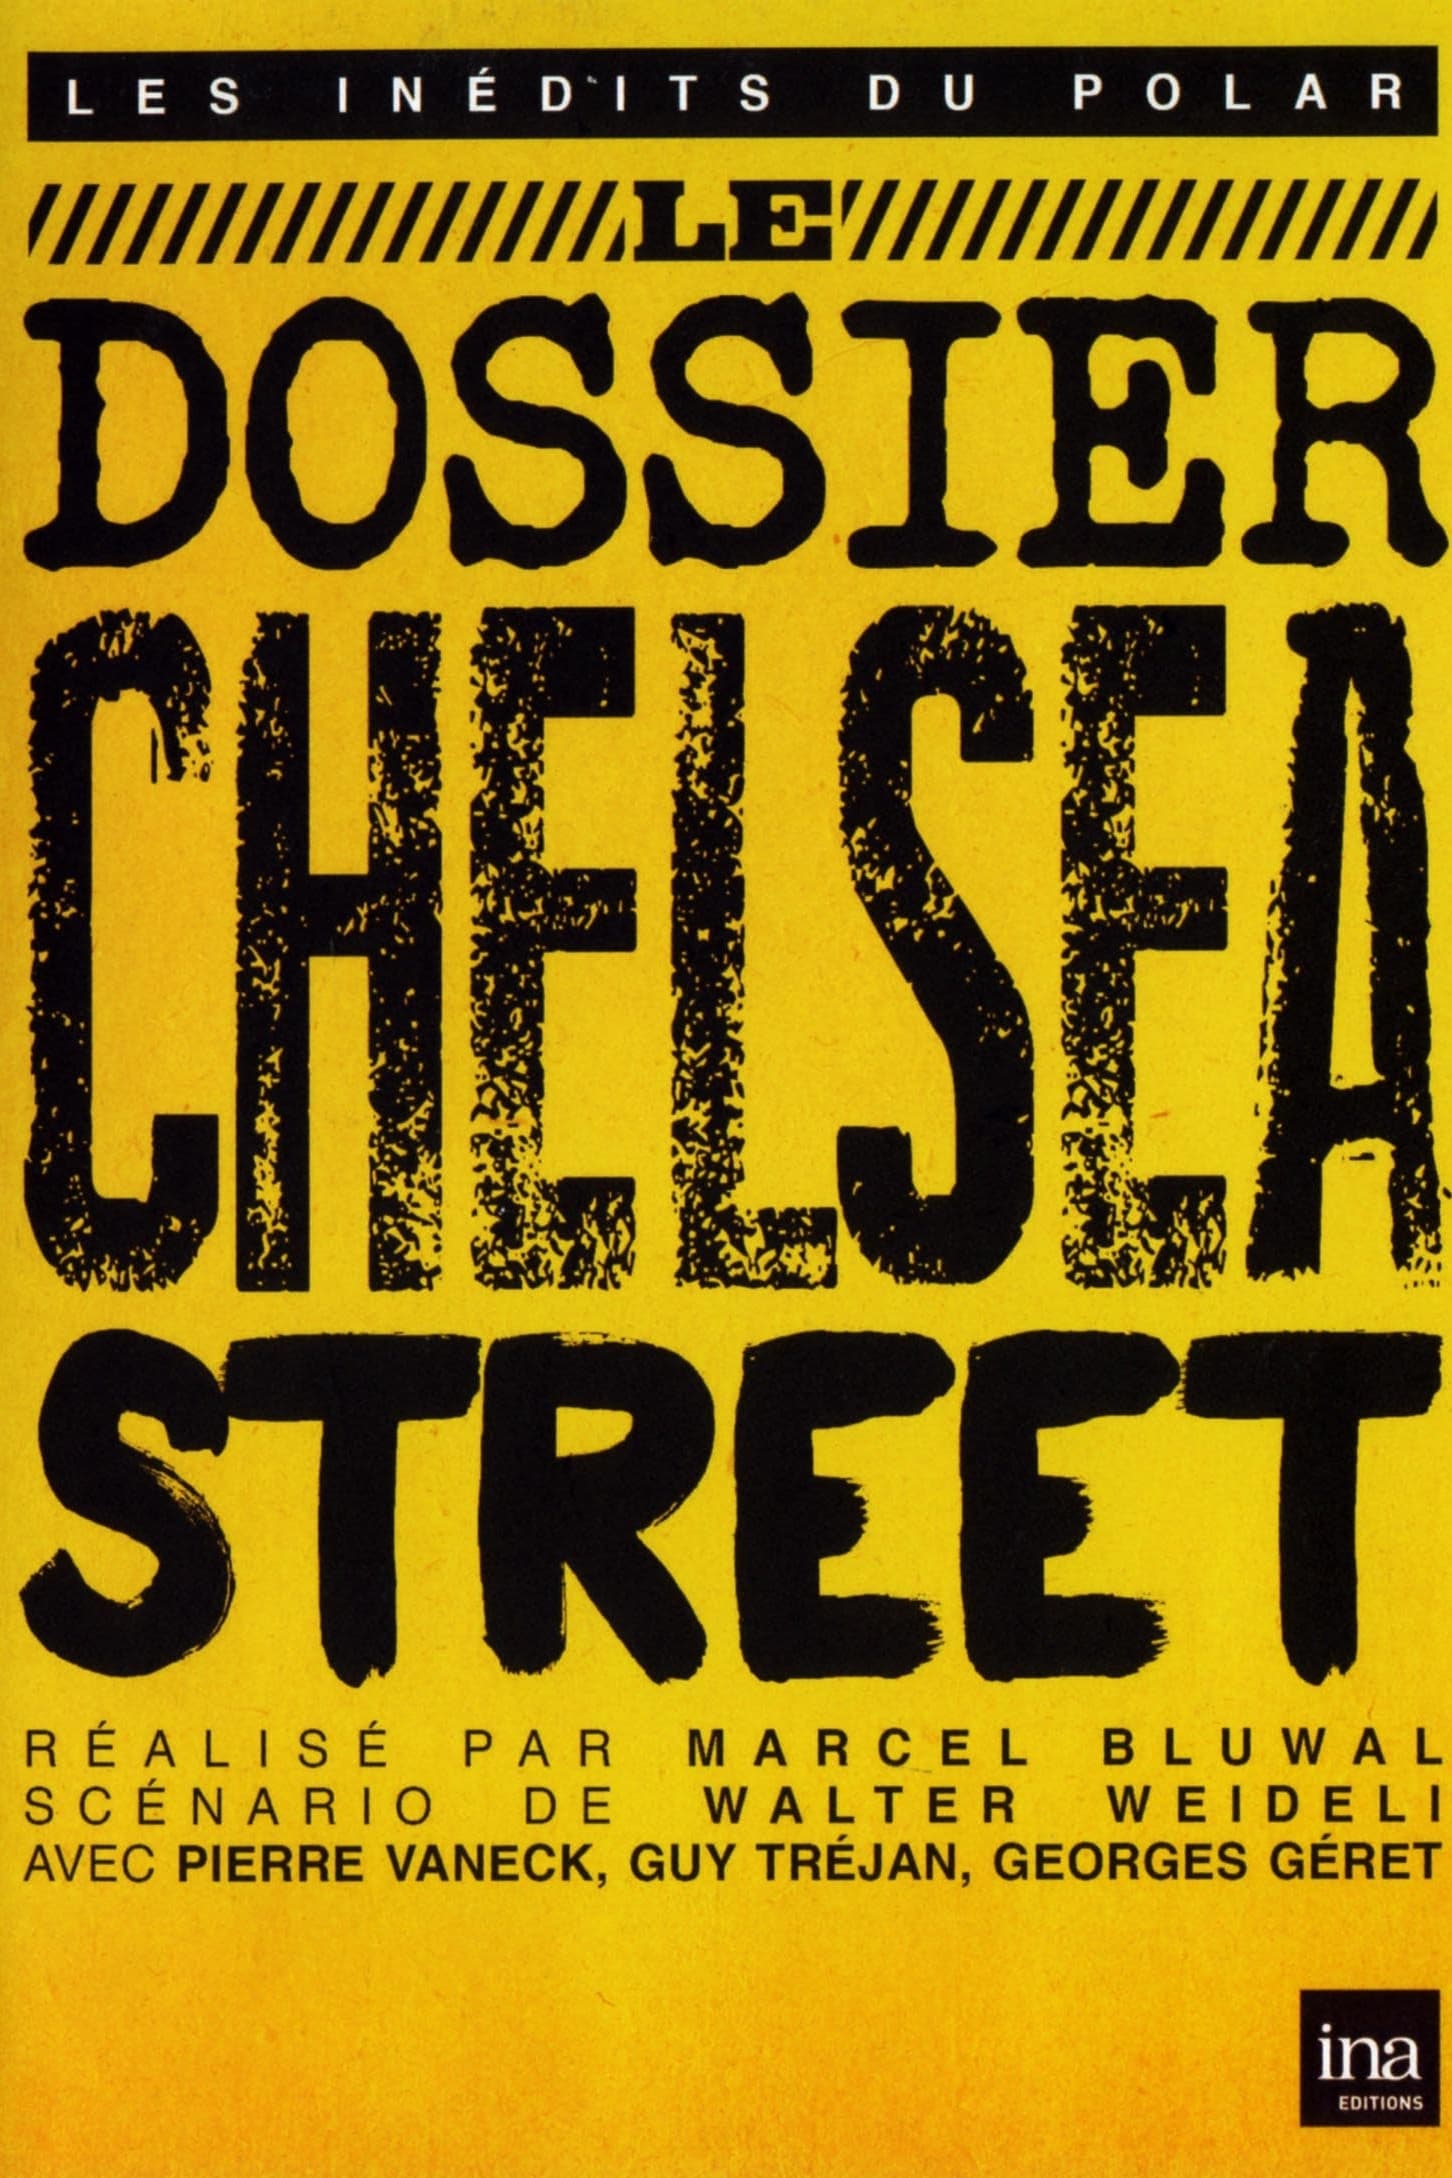 Le Dossier Chelsea Street